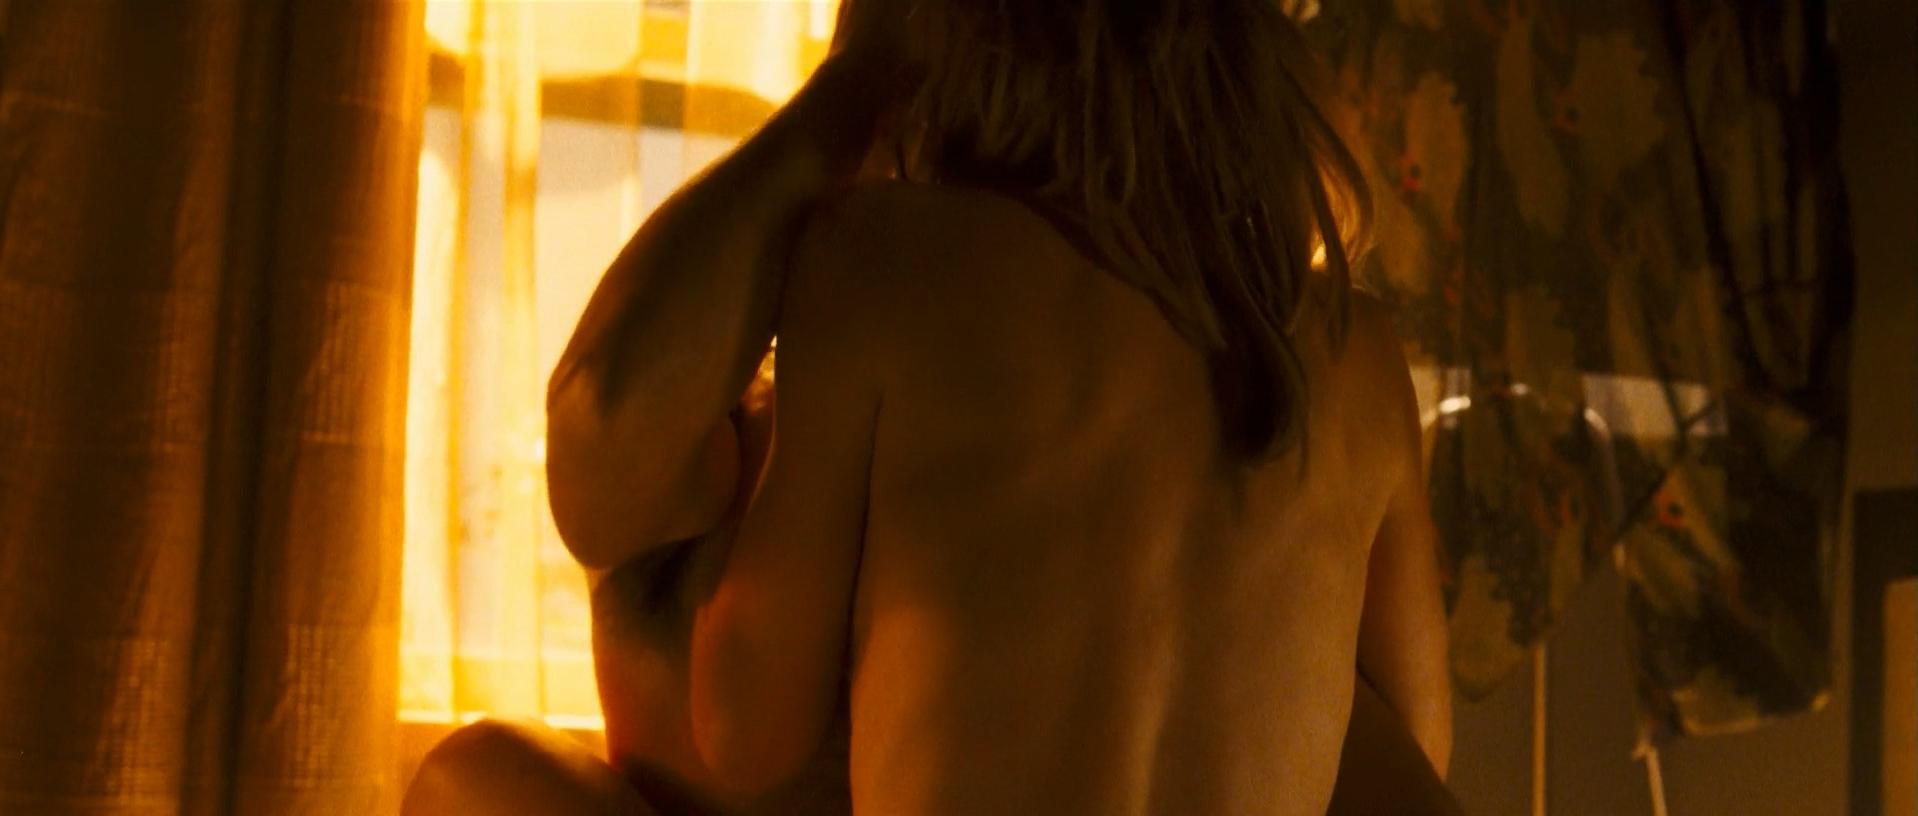 Nude video celebs » Radha Mitchell nude - The Code (2009)